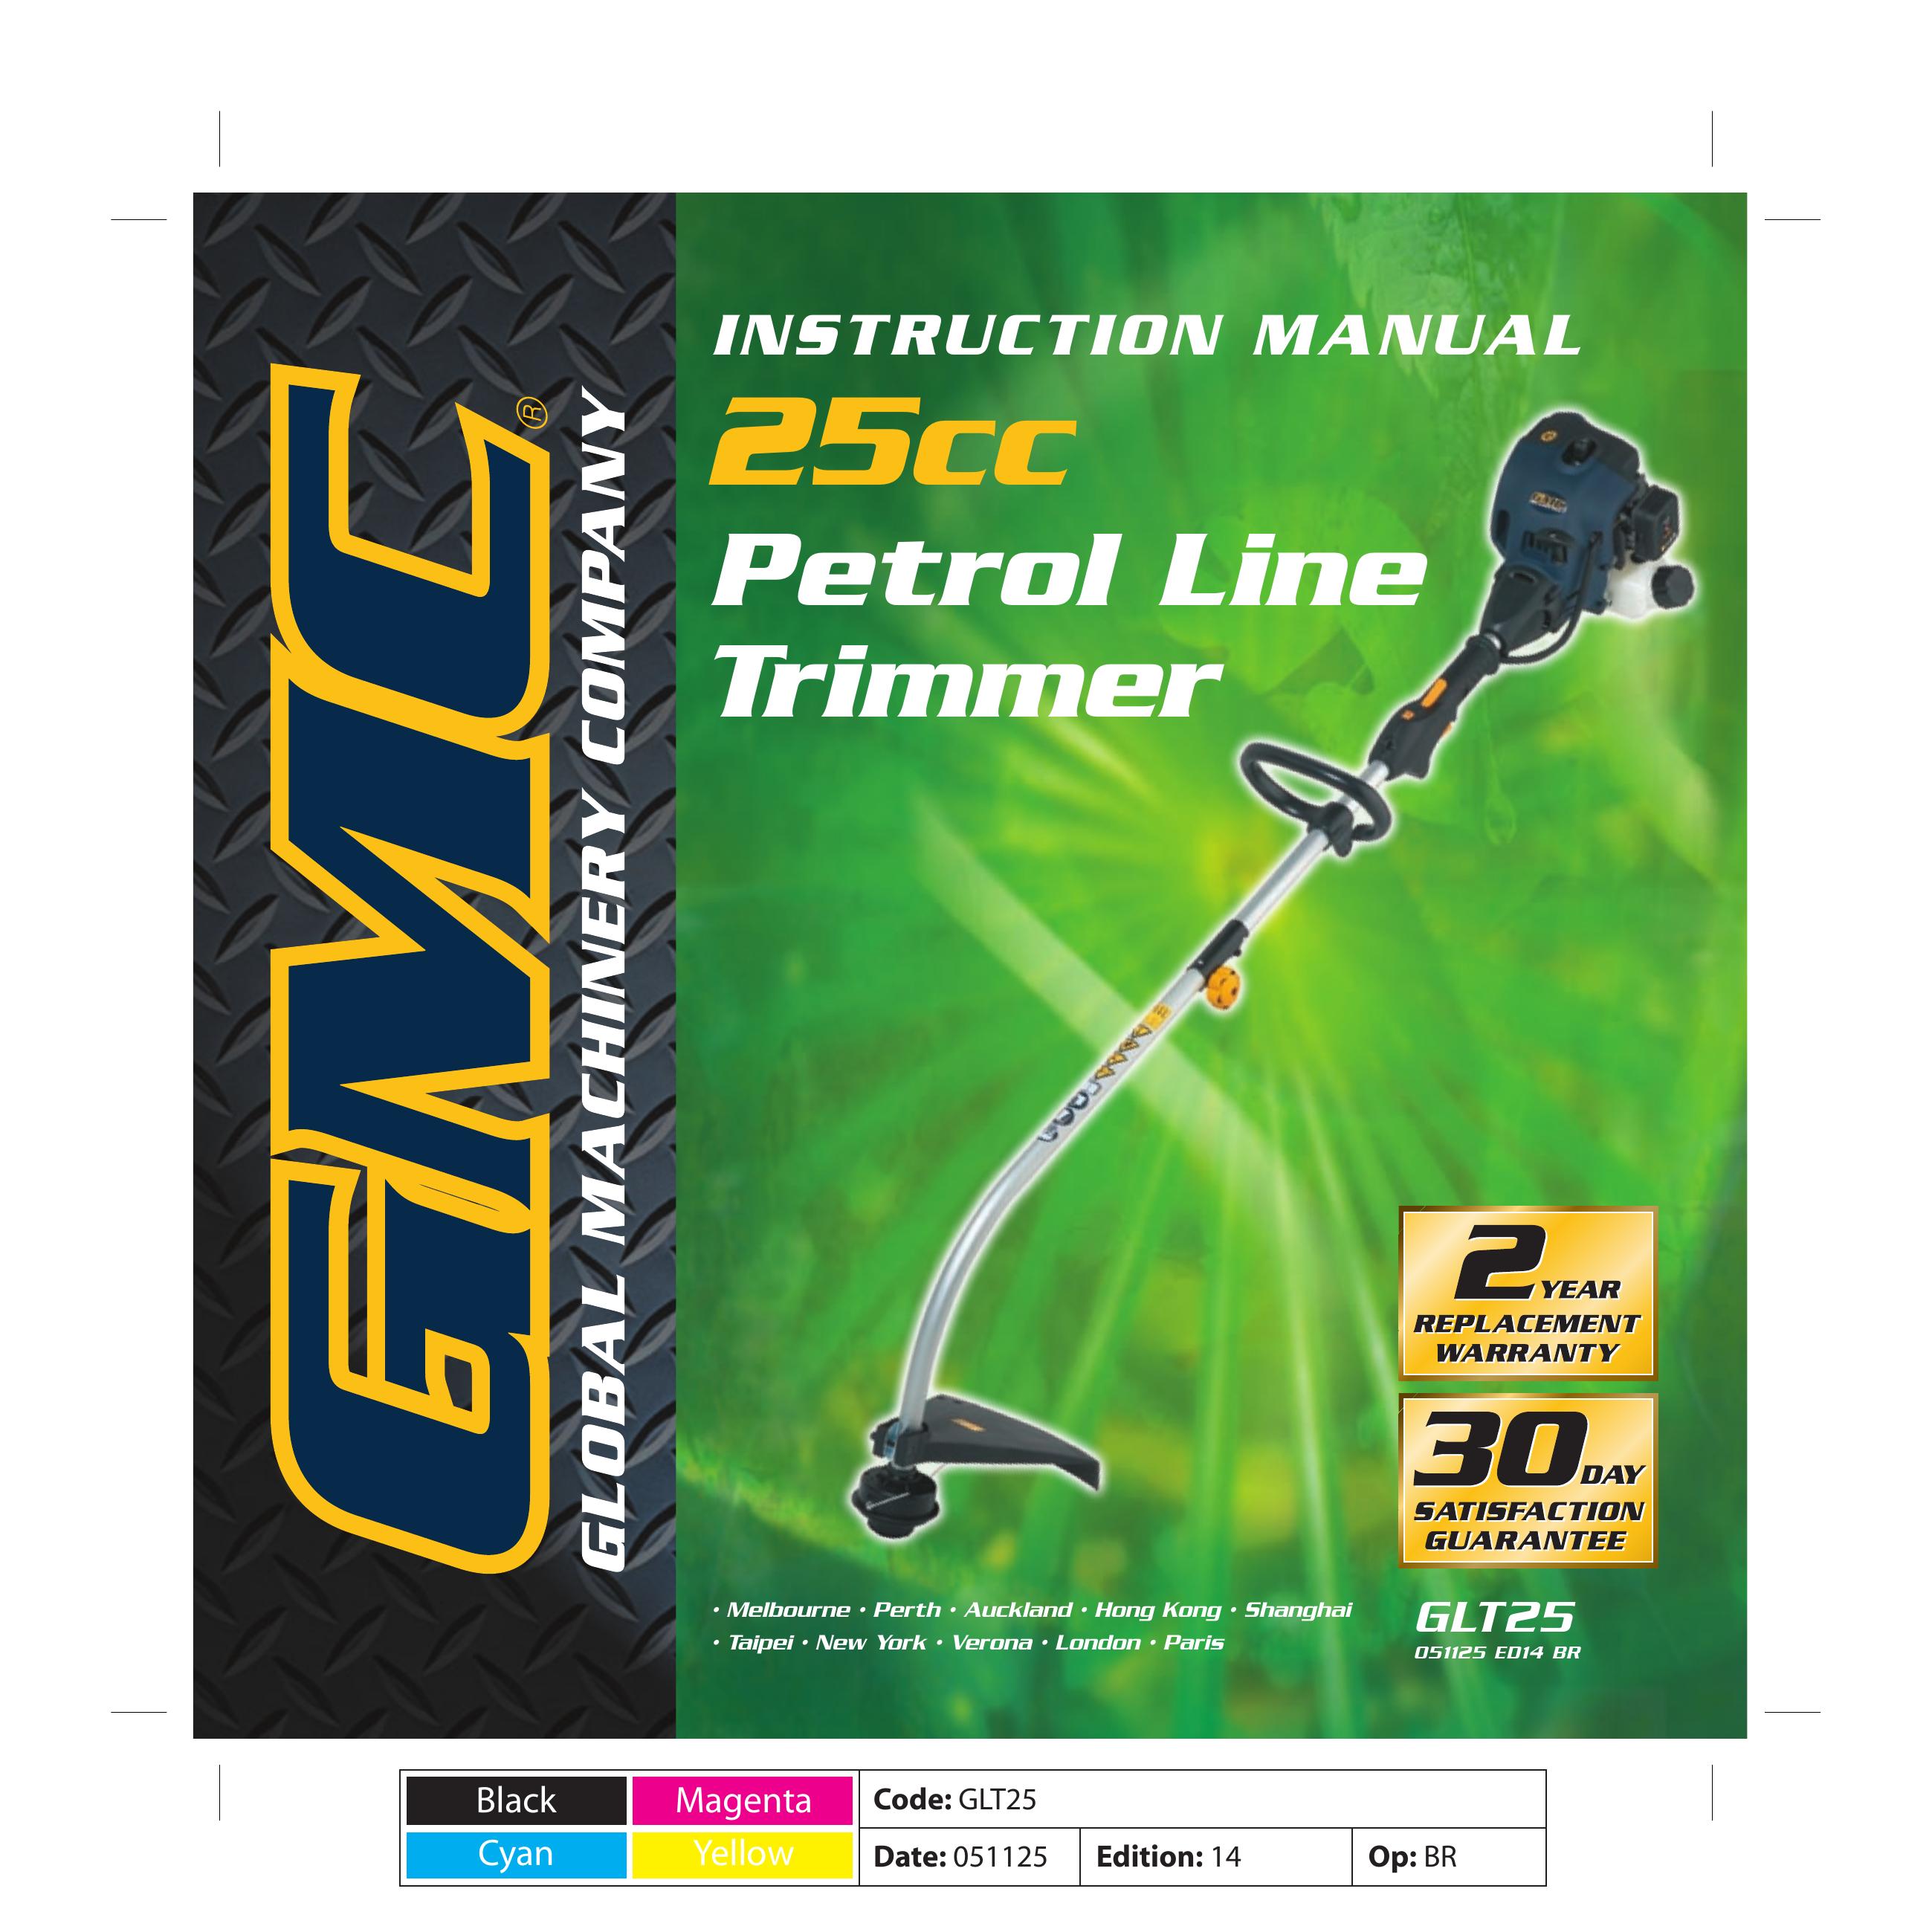 Global Machinery Company GLT25 Trimmer User Manual